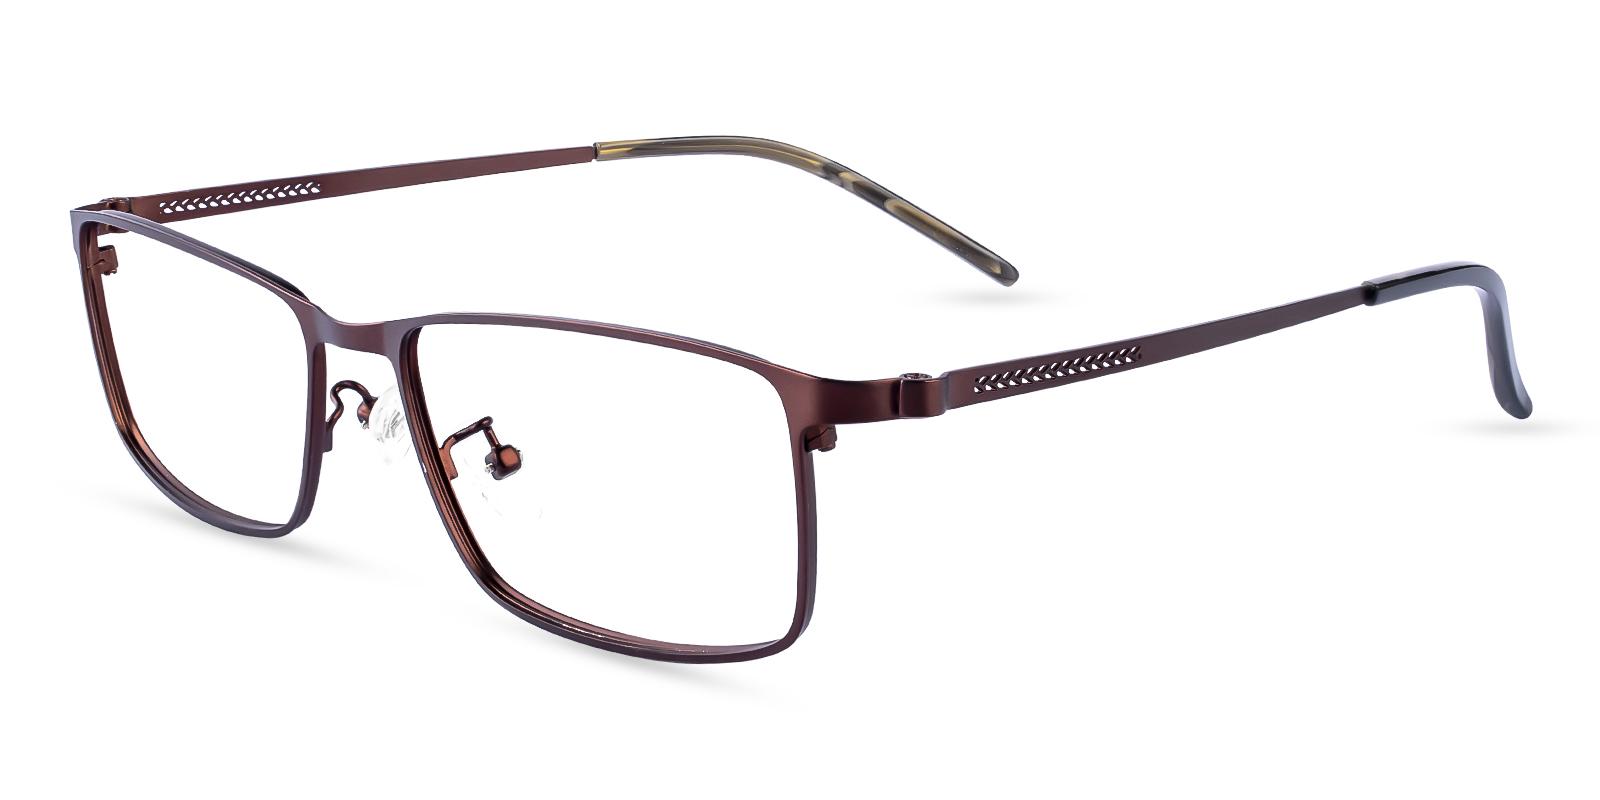 Daniel Brown Metal Eyeglasses , NosePads Frames from ABBE Glasses